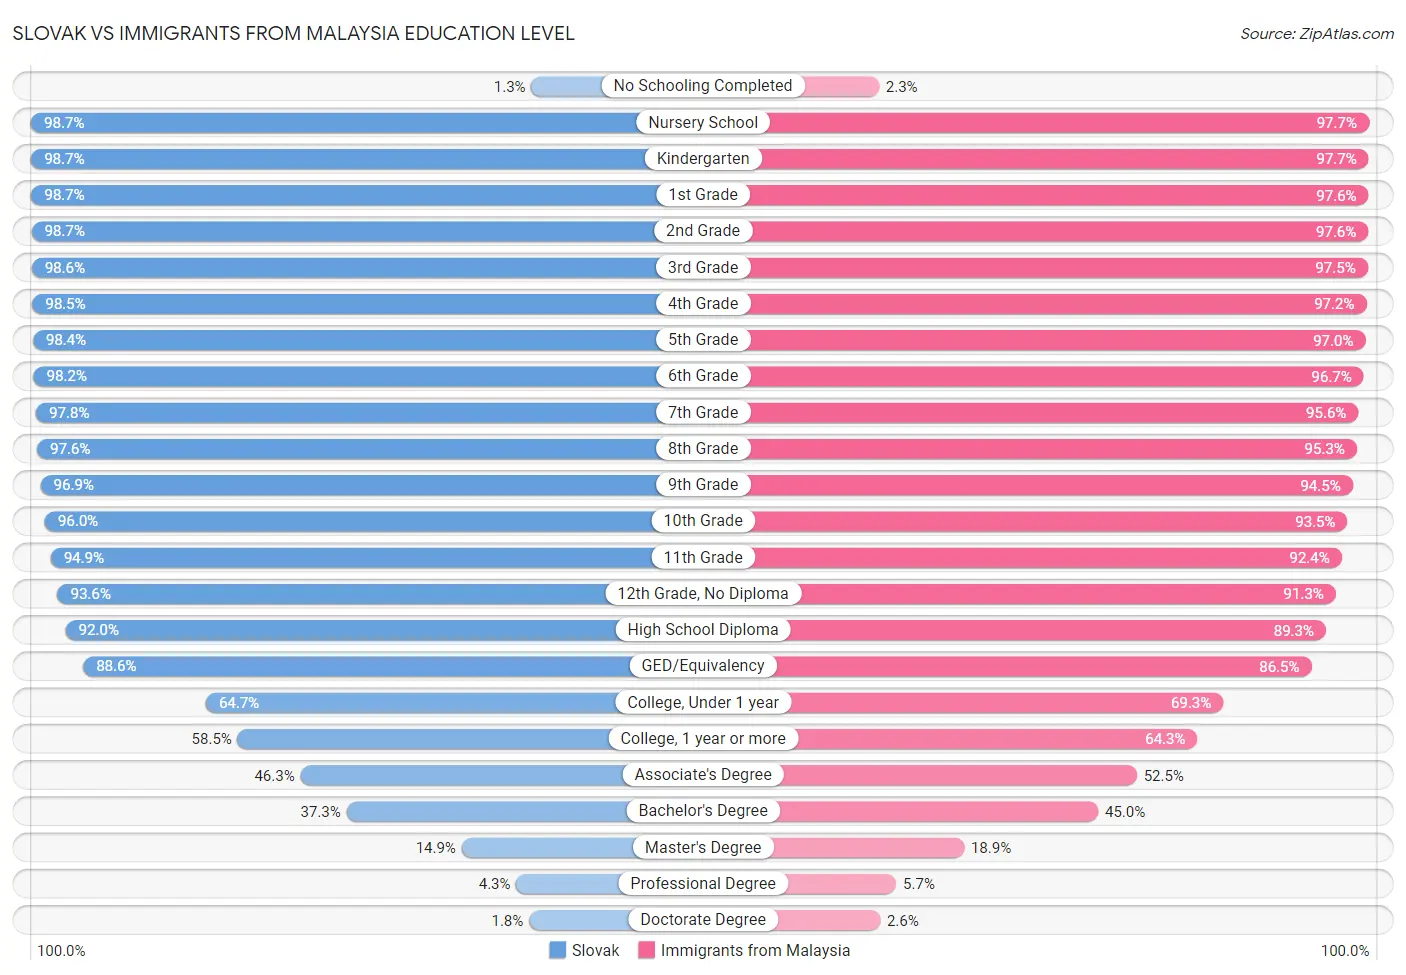 Slovak vs Immigrants from Malaysia Education Level